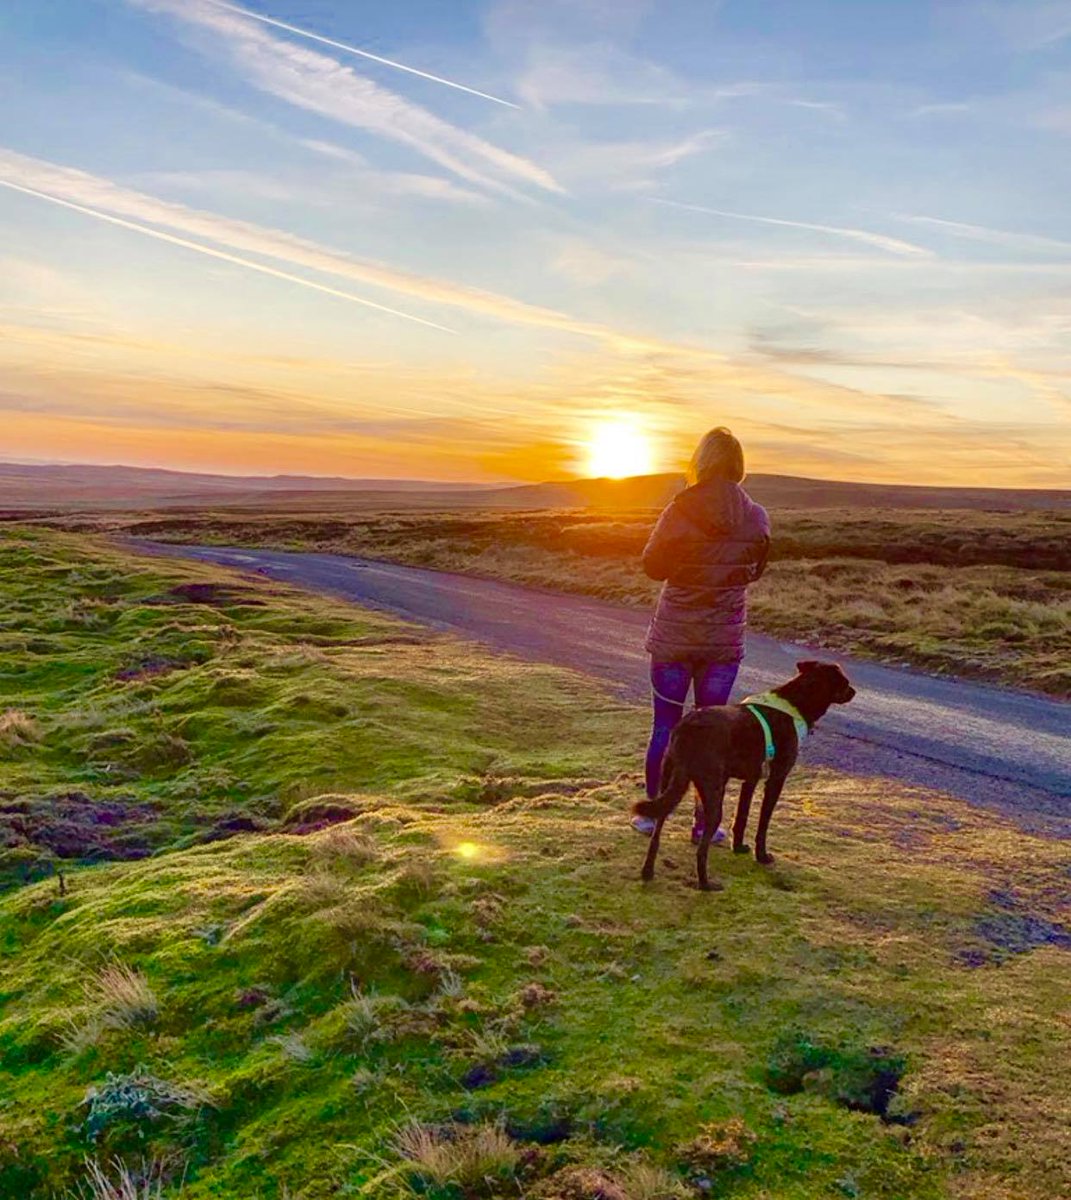 Enjoy the Sunset with your Furry Friend 🐾 🐶 #TanHillInn #walks #DogWalk